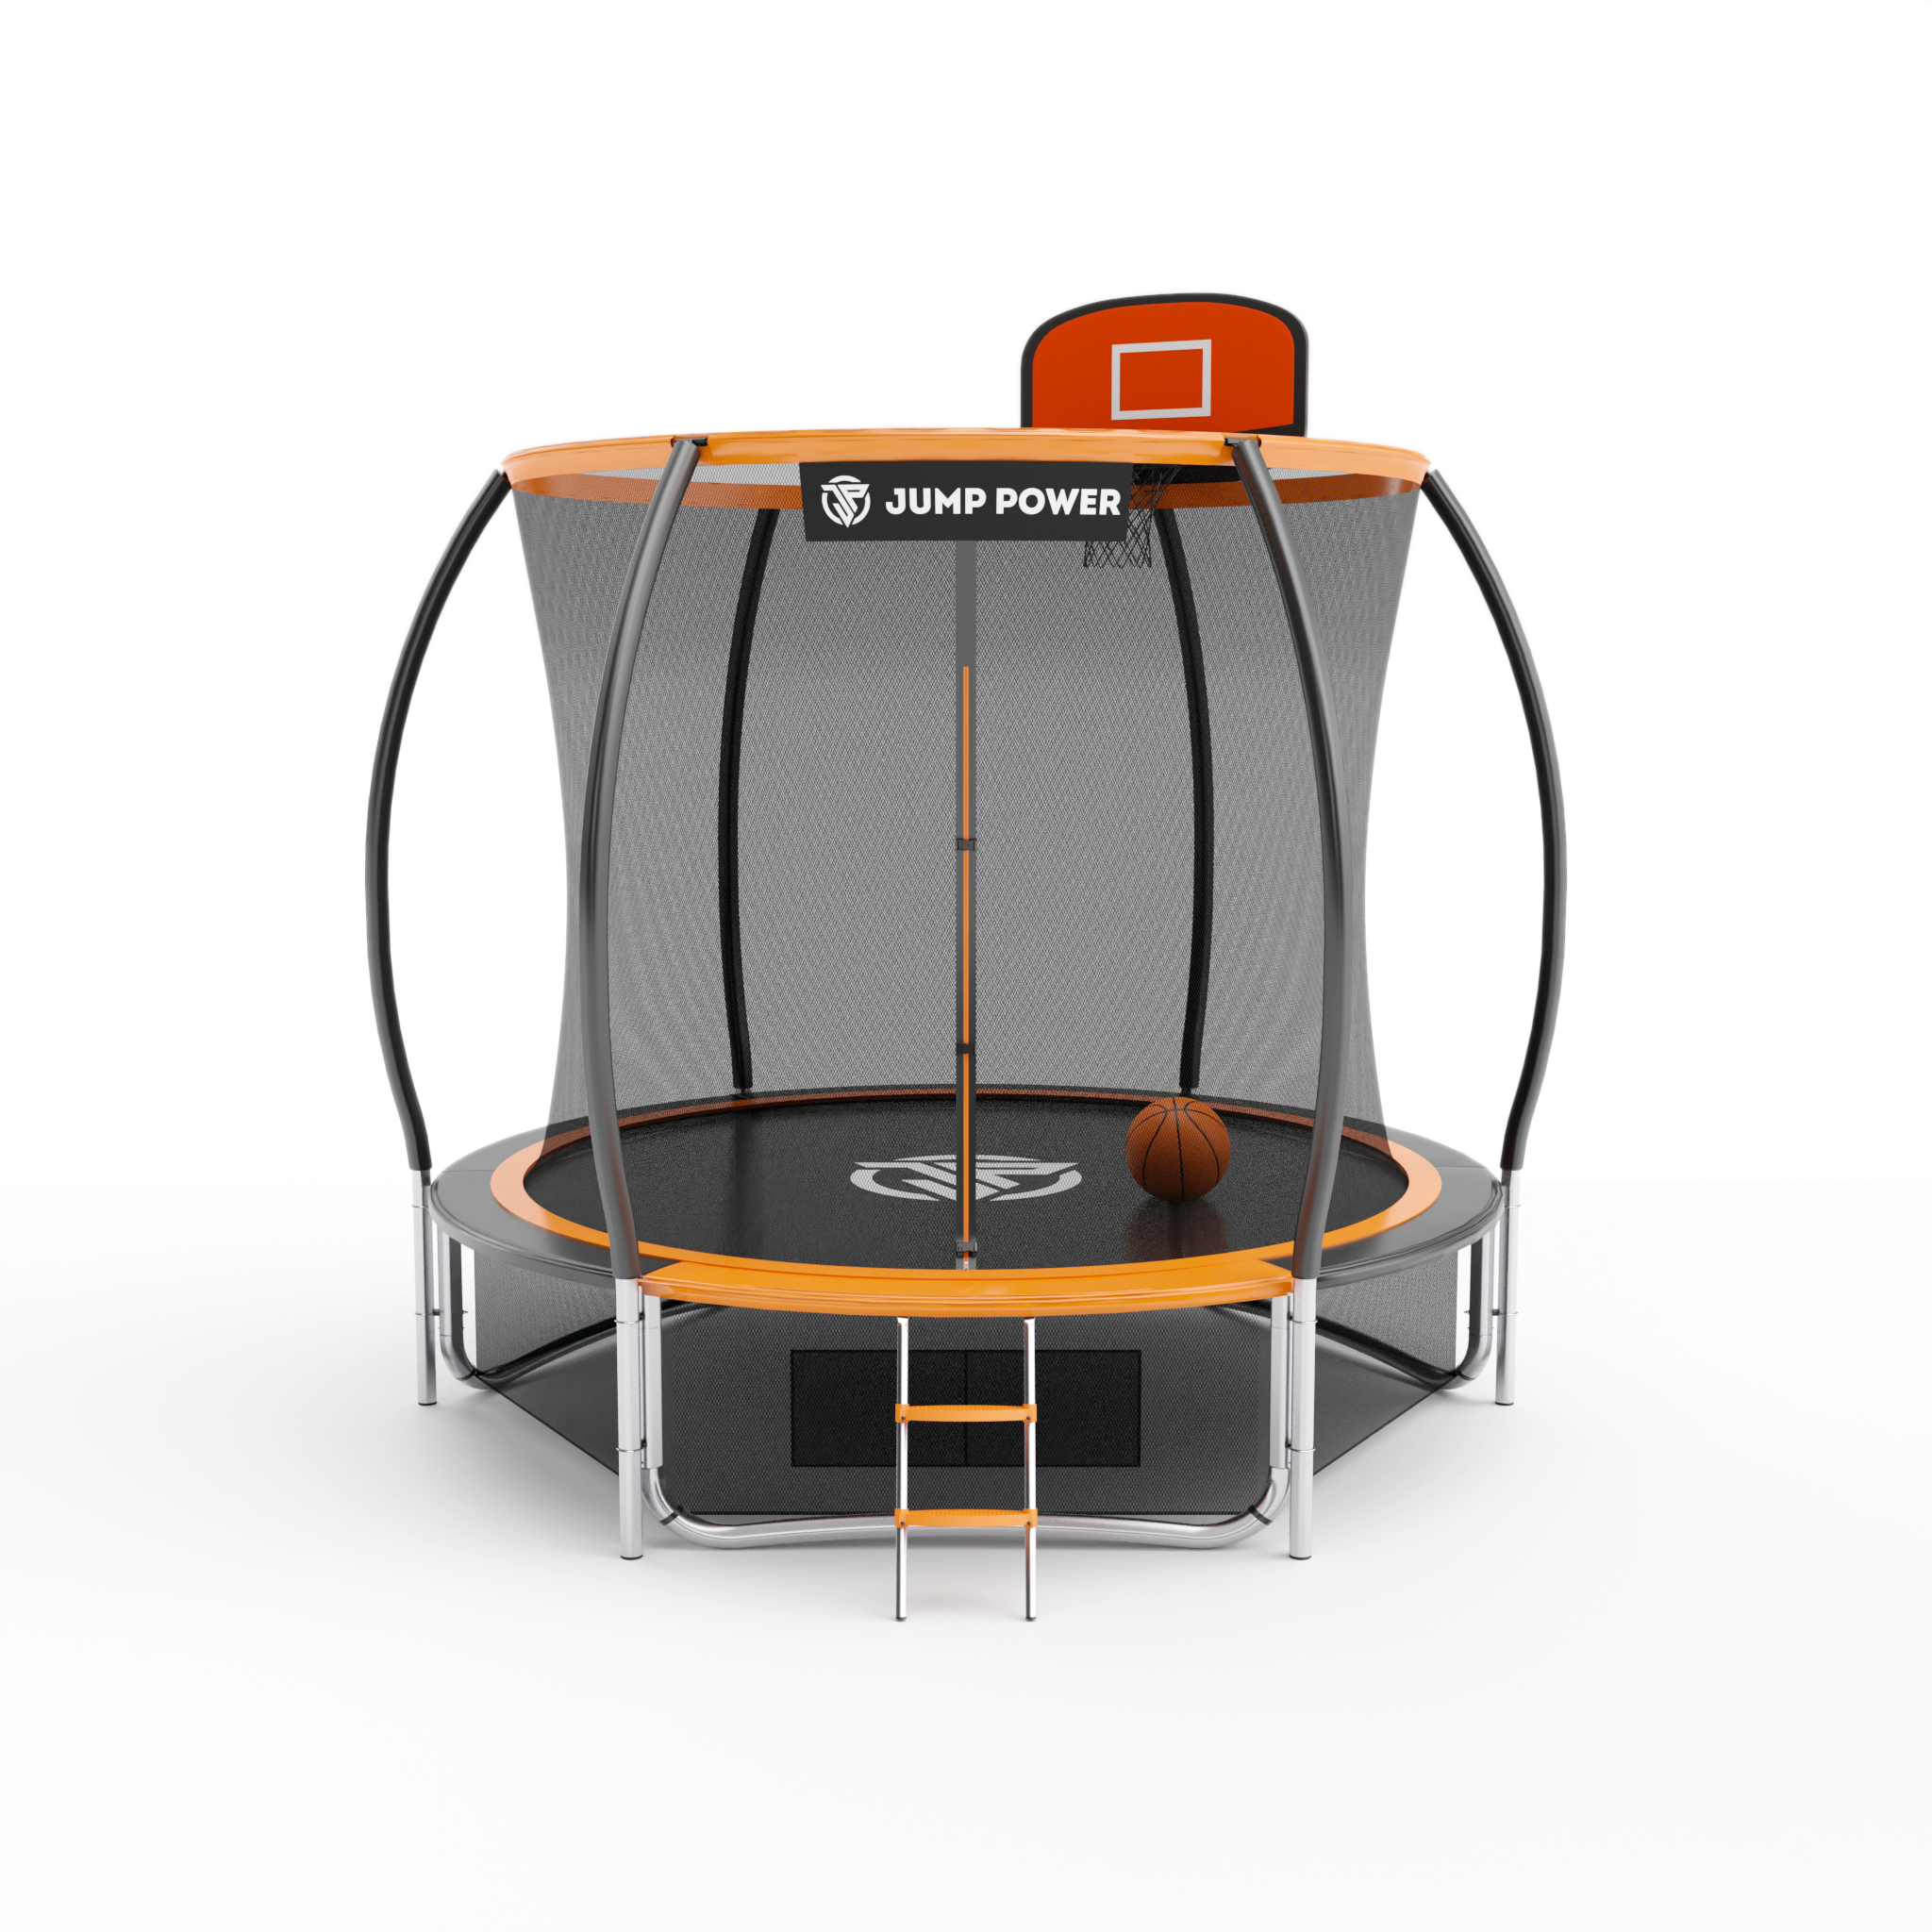 Фото 2 - Батут Jump Power 8 ft Pro Inside Basket Orange.